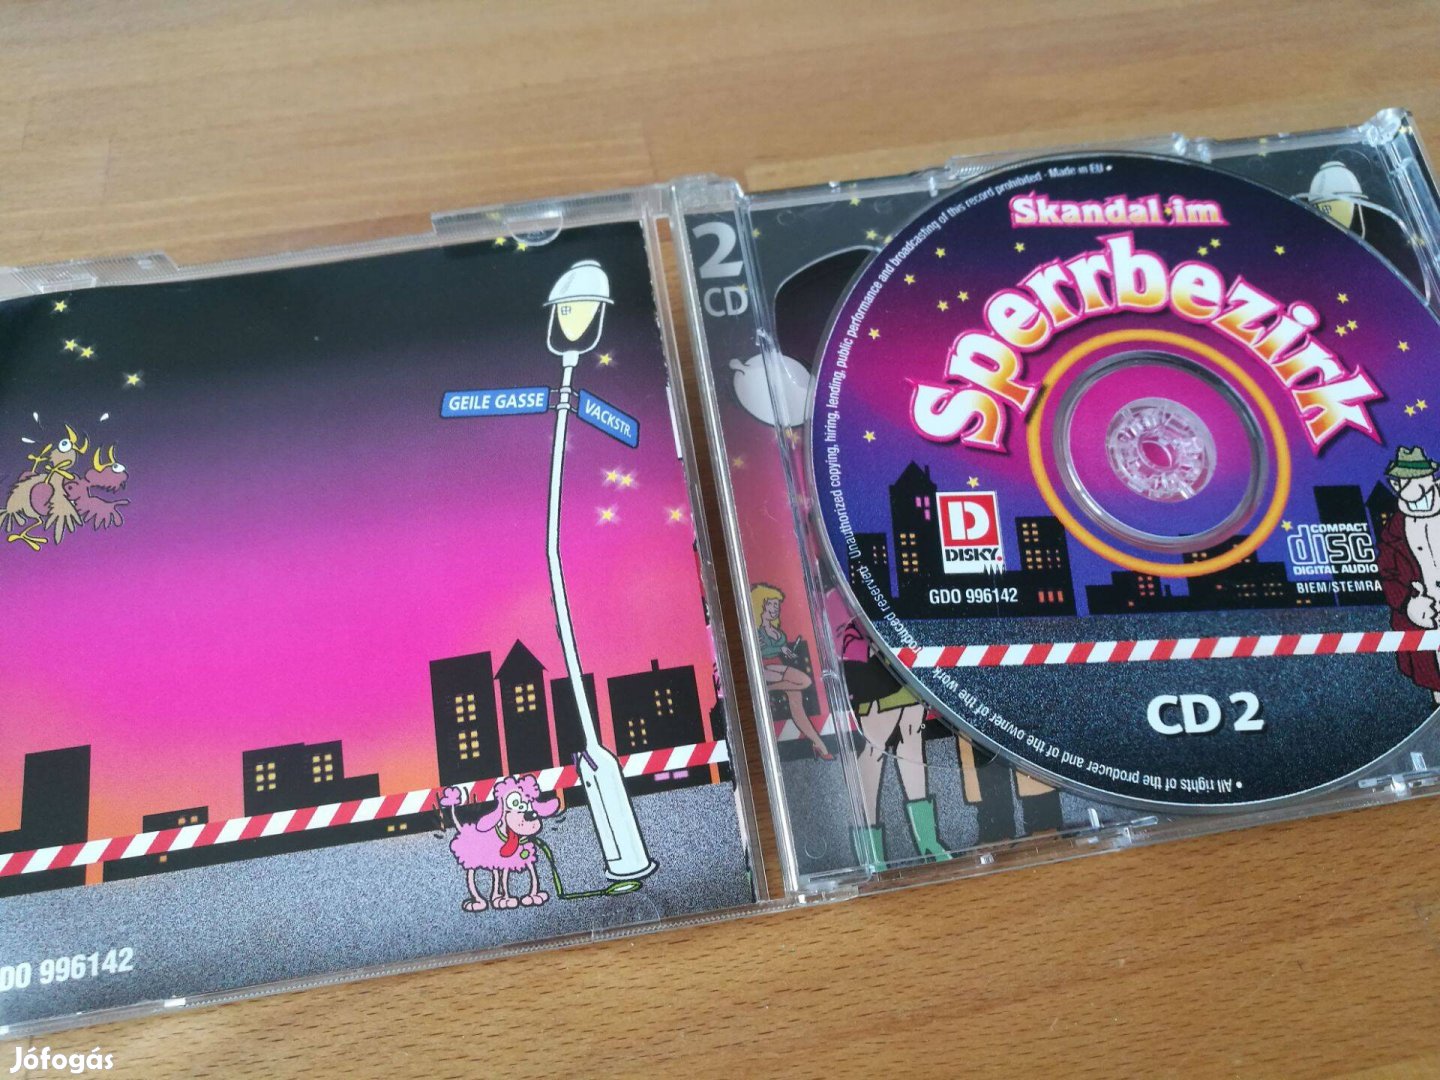 Skandal im Sperrbezirk (Disky, EU, 2000, dupla CD)